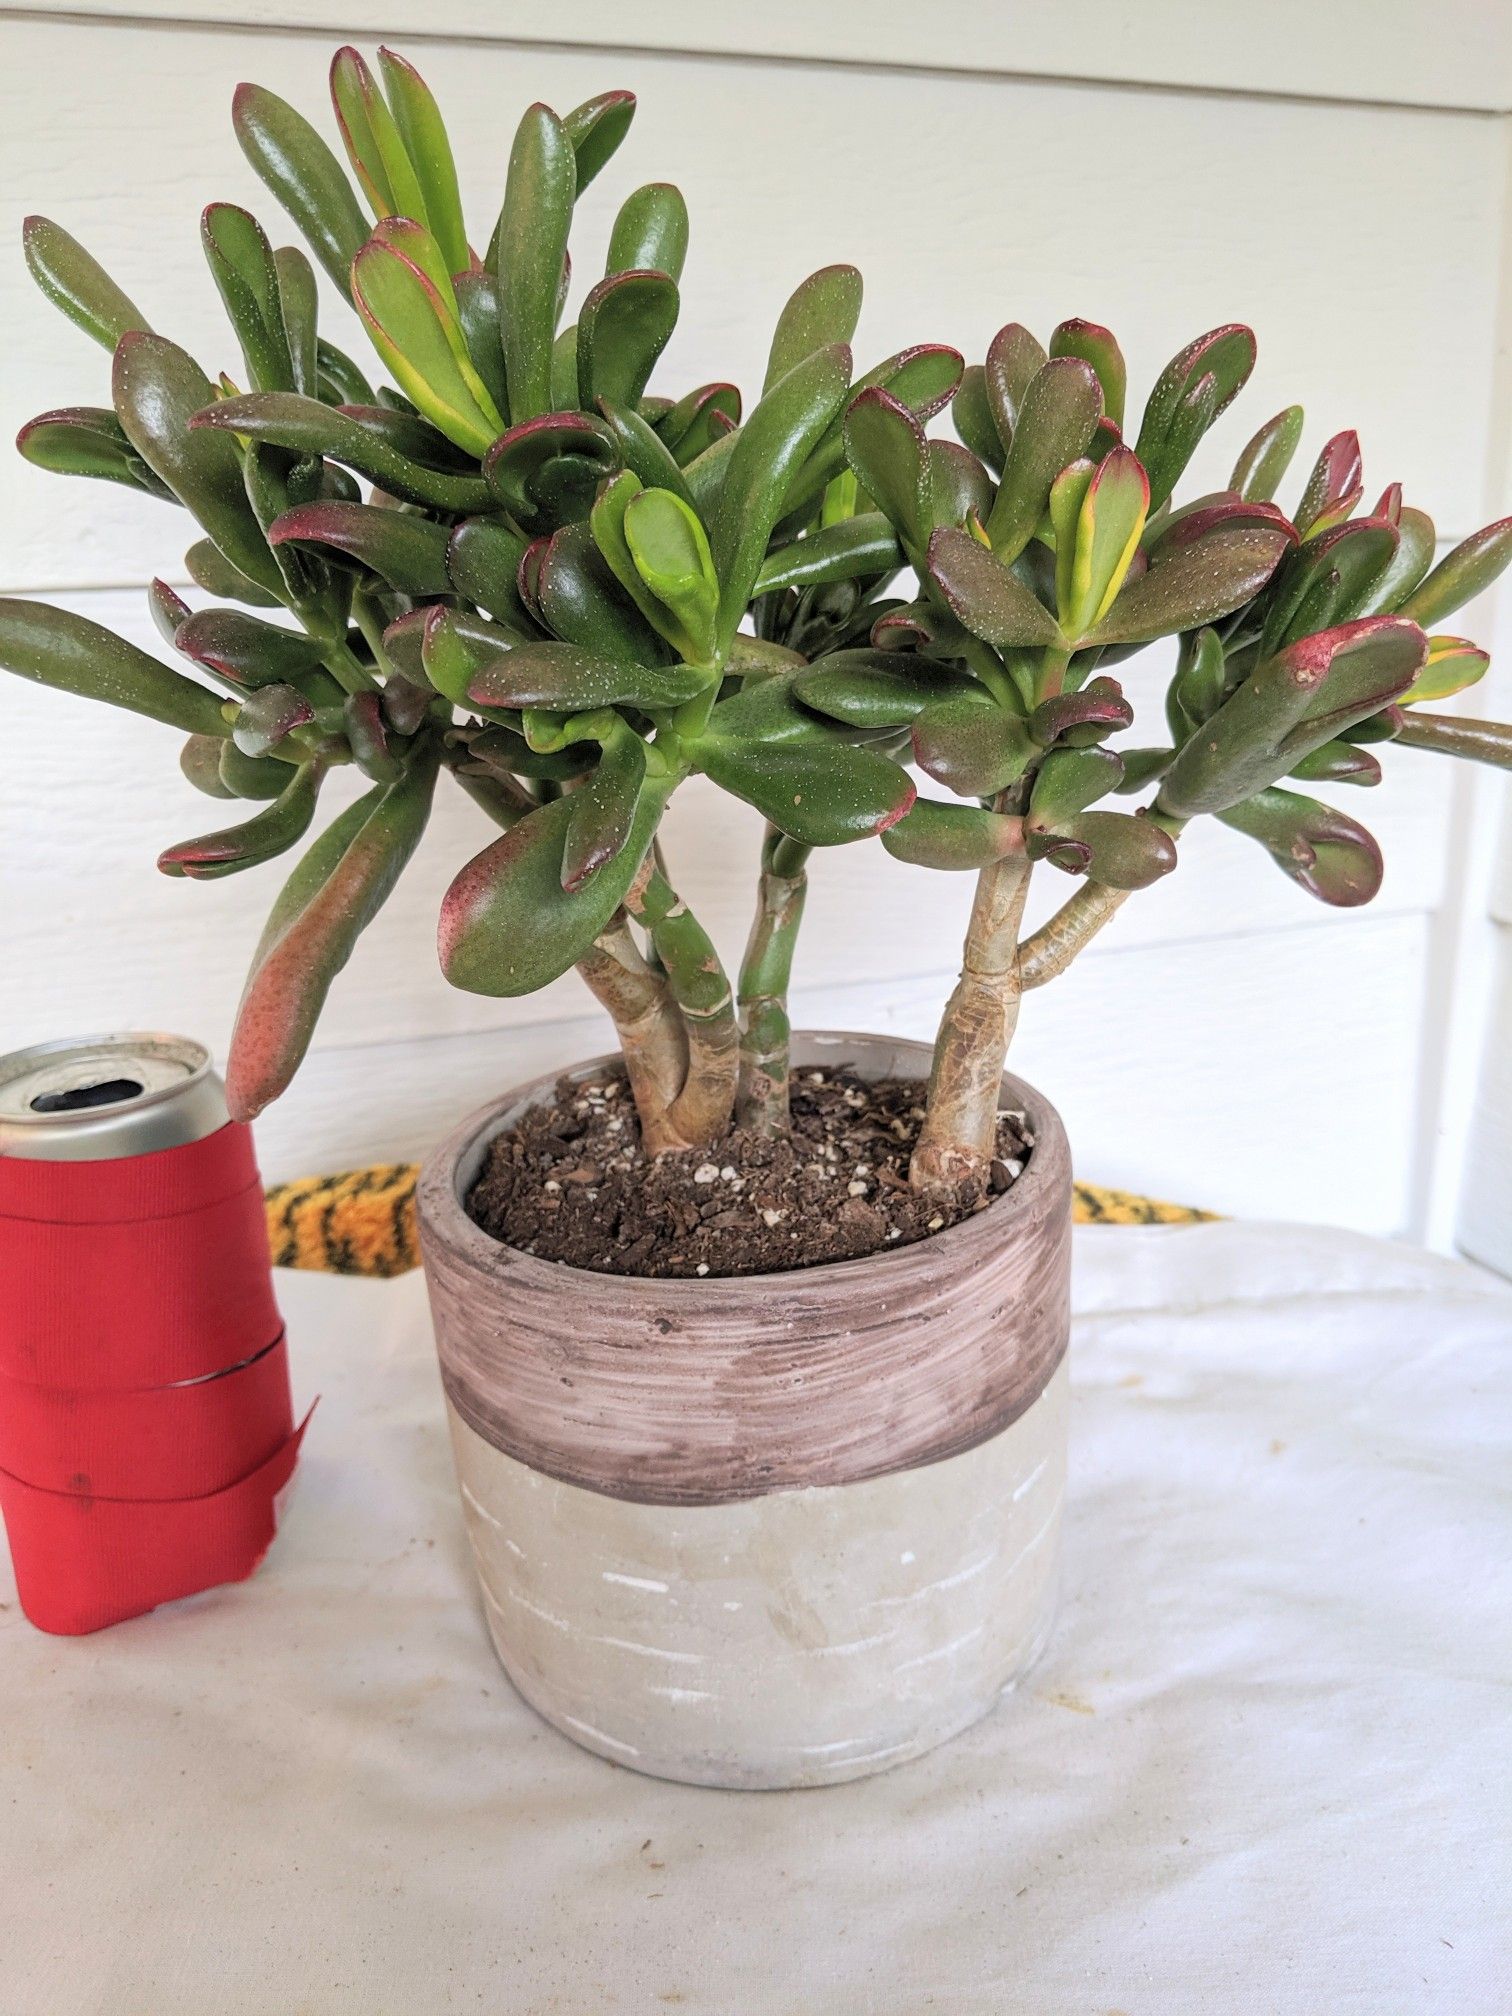 Spoon Jade Succulent Plants in Ceramic Planter Pot- Real Indoor House Plant